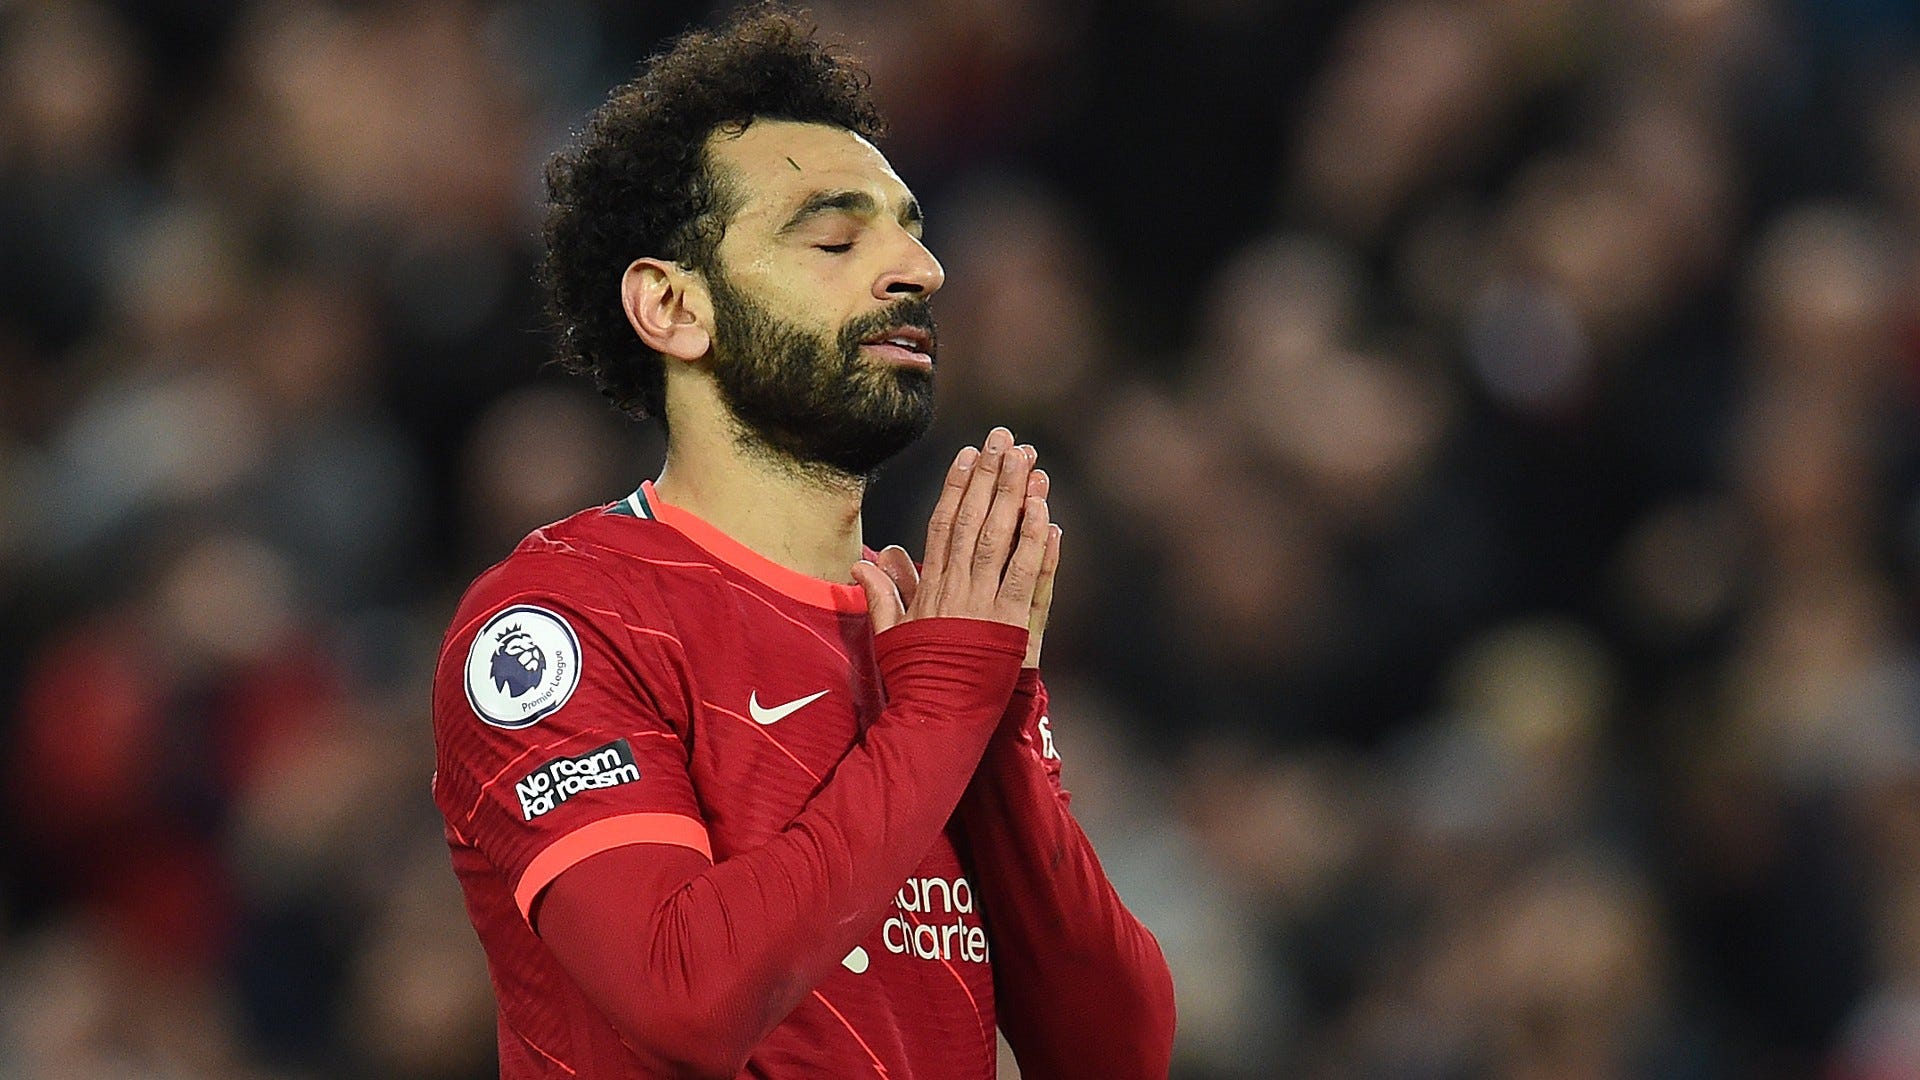 Salah keeps faith ahead of Liverpool and Manchester City's final Premier League matches - Goal.com